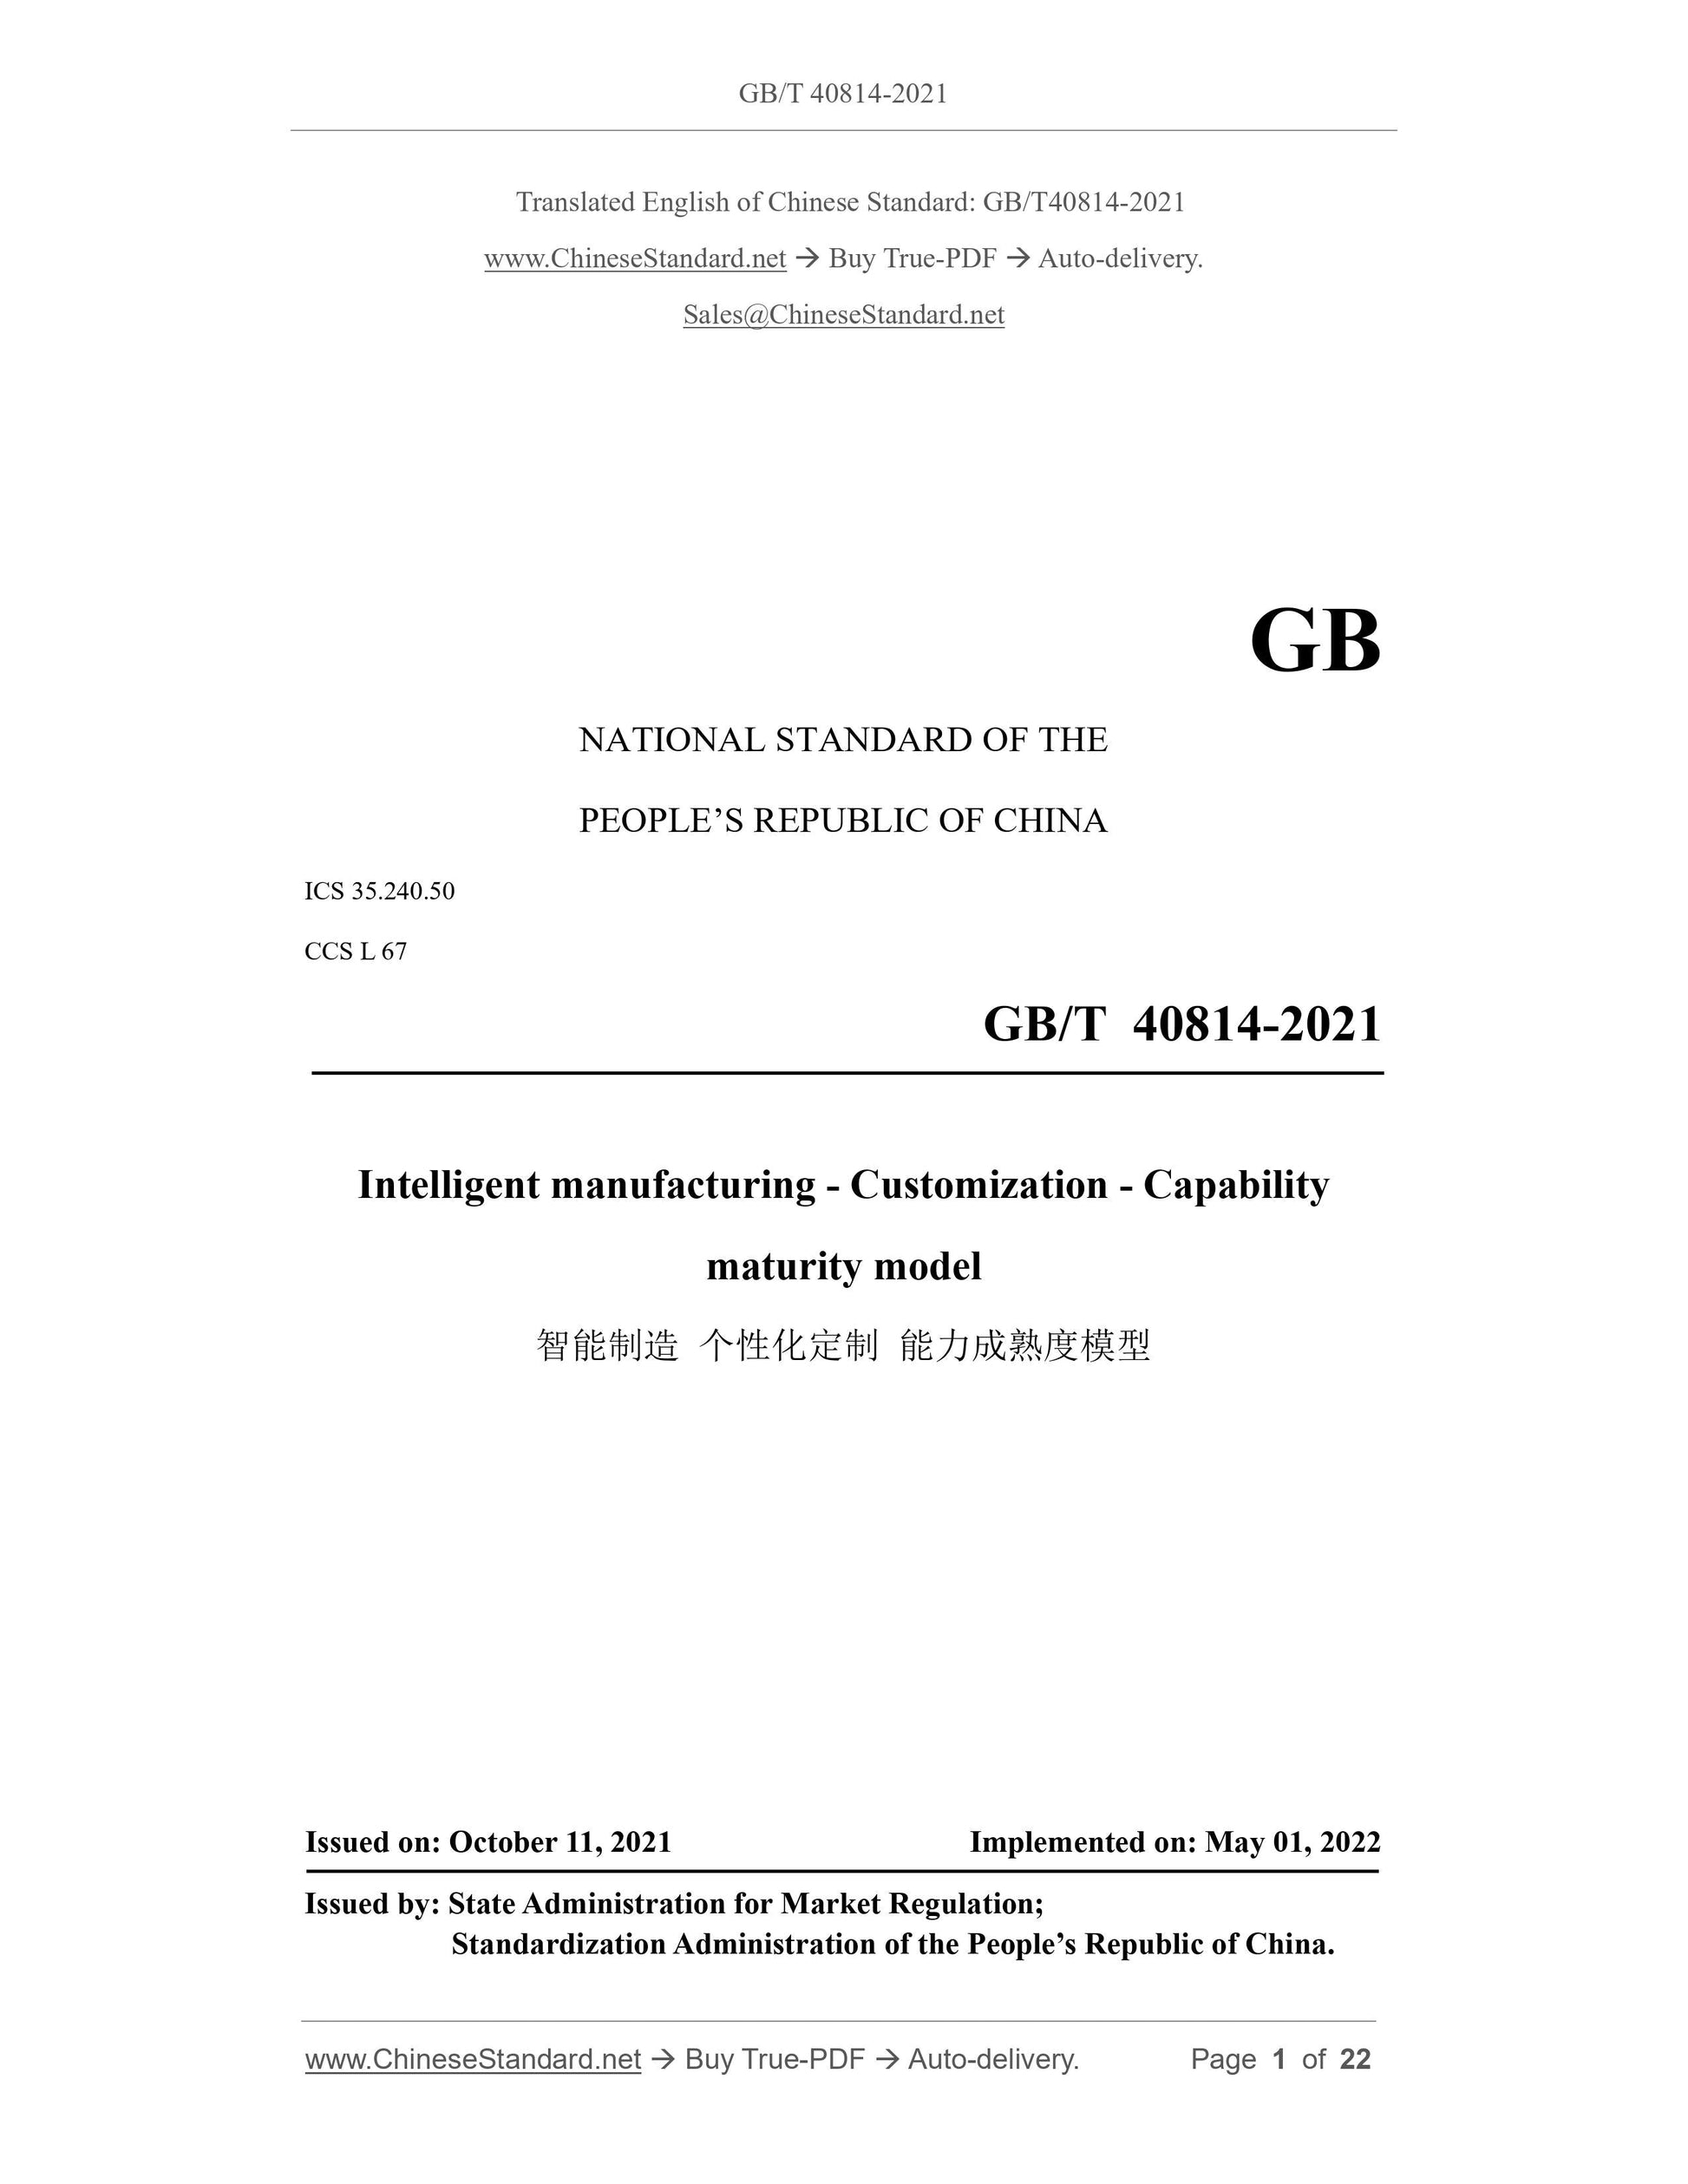 GBT40814-2021 Page 1